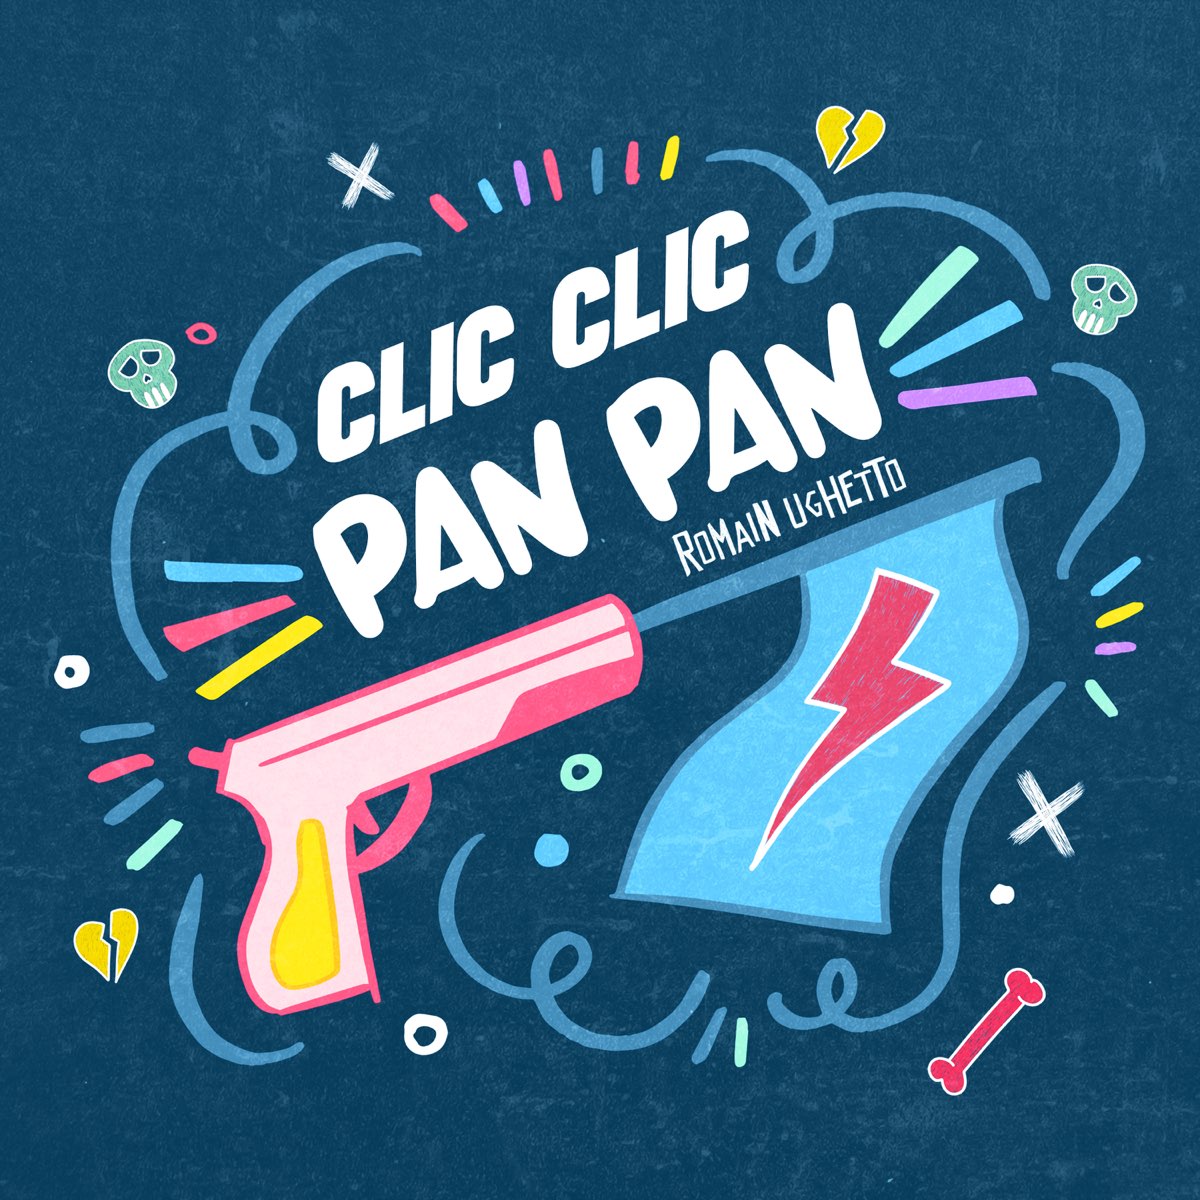 Clic clic pan pan - Single - Album by Romain Ughetto - Apple Music